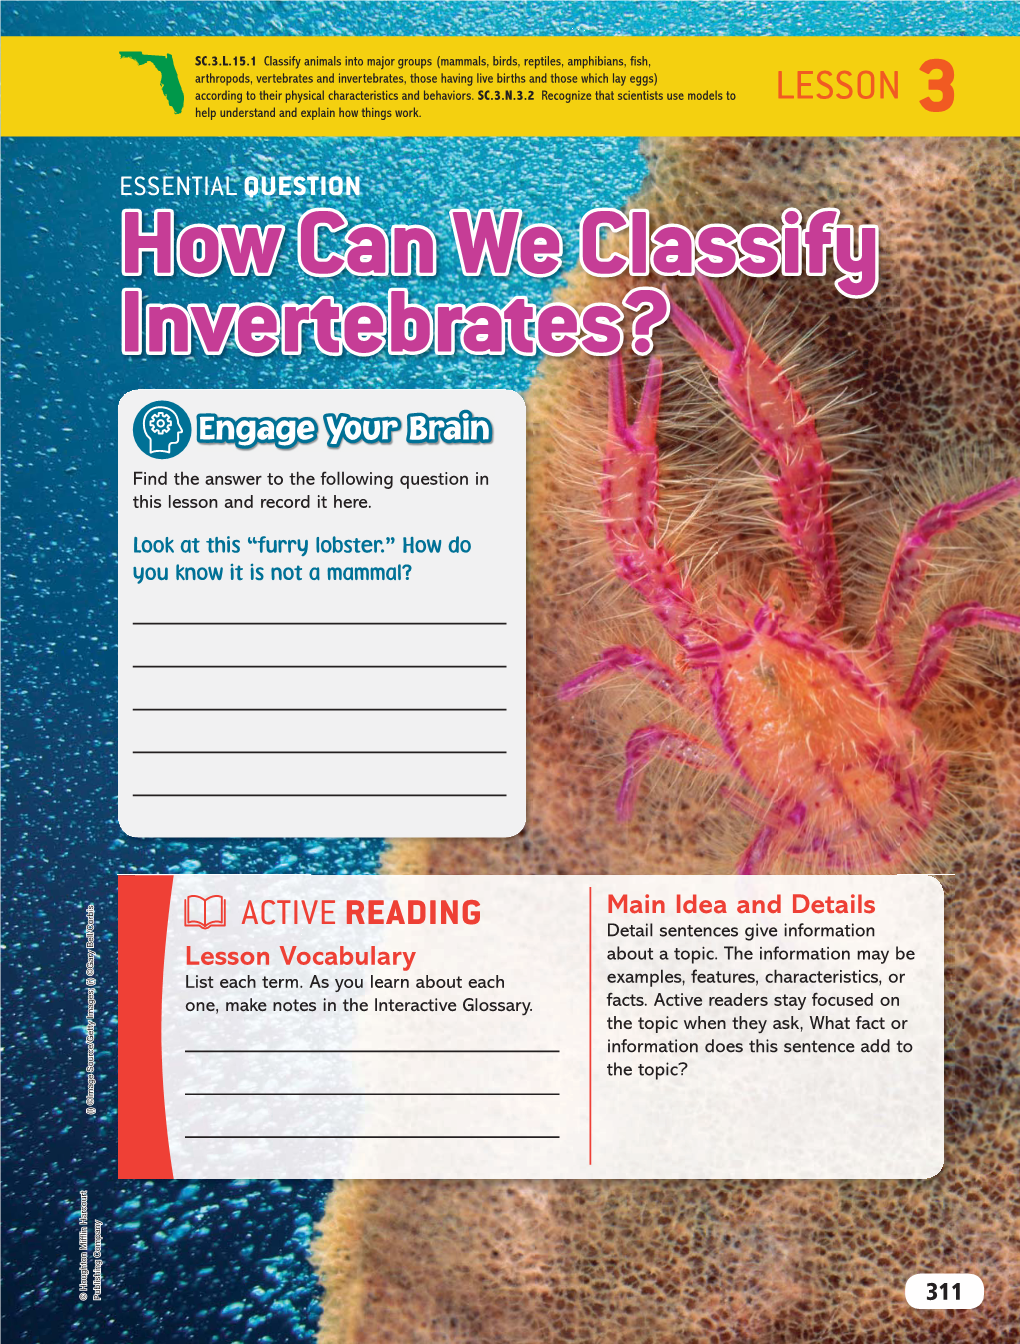 How Can We Classify Invertebrates?